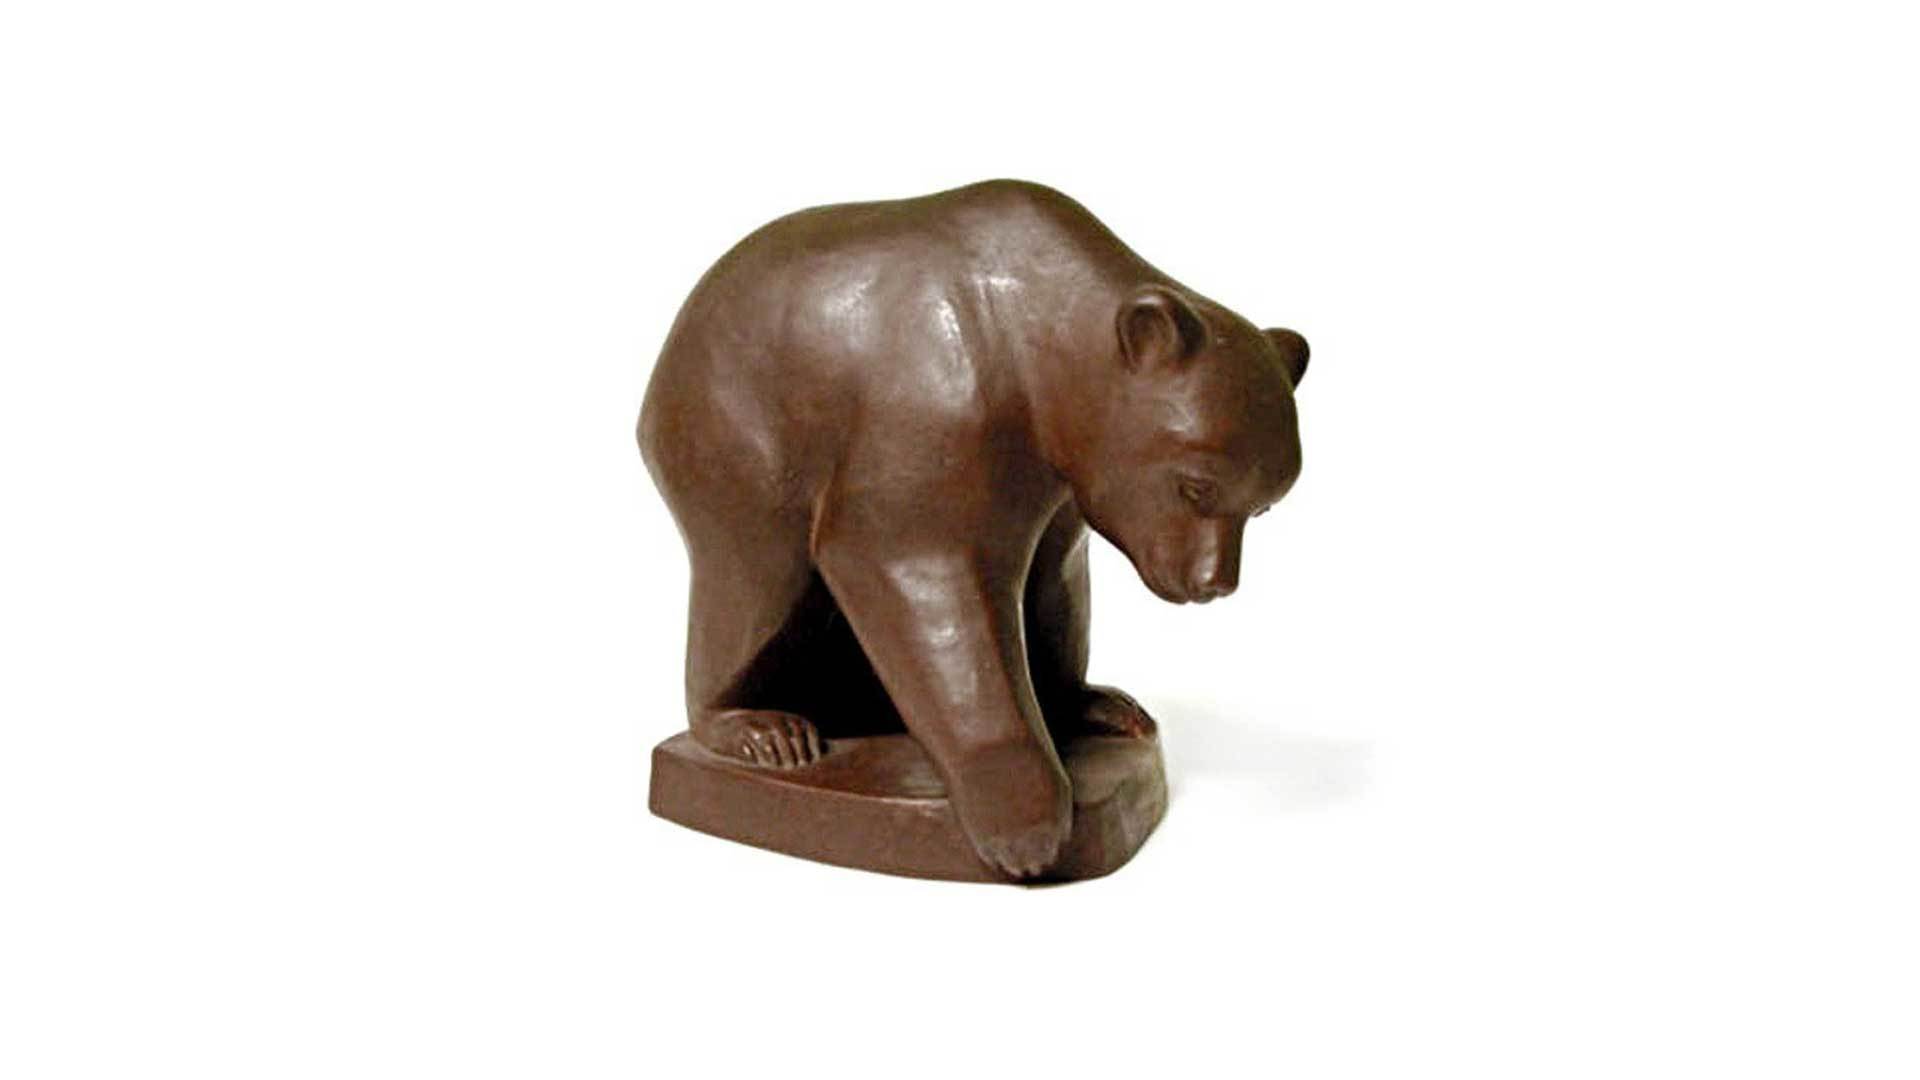 Фигурка Meissen 11,5 см Медведь, Элфриде Райхел-Дрехслер,1959г